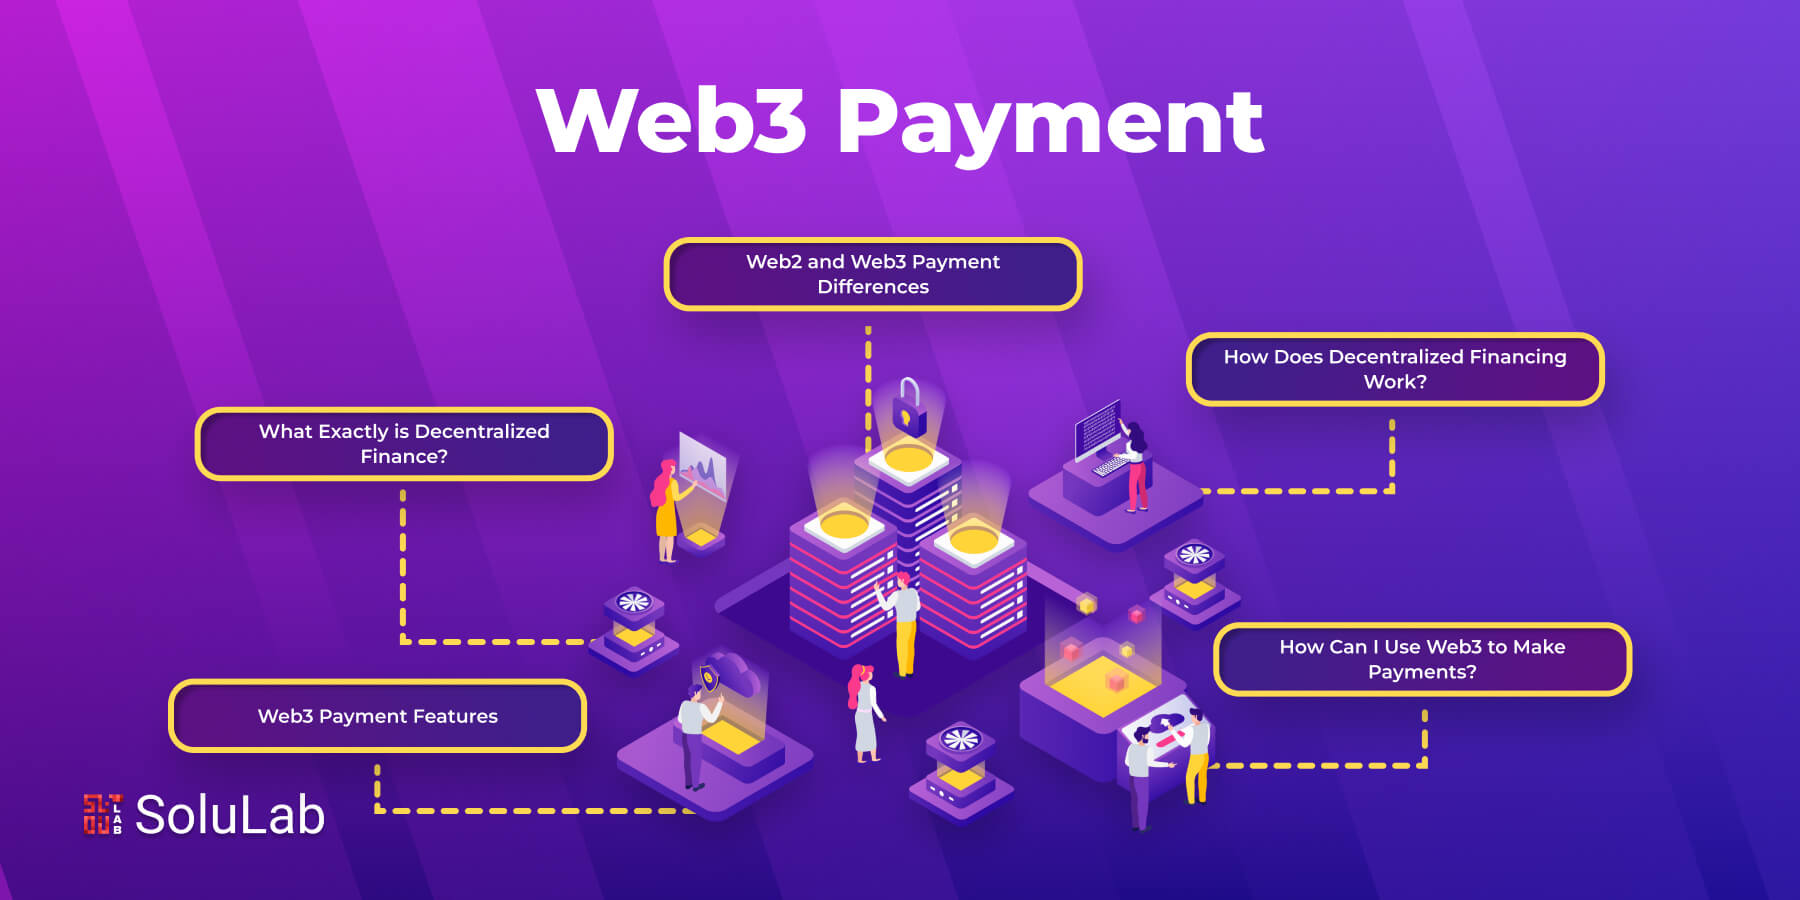 Web3 Payment